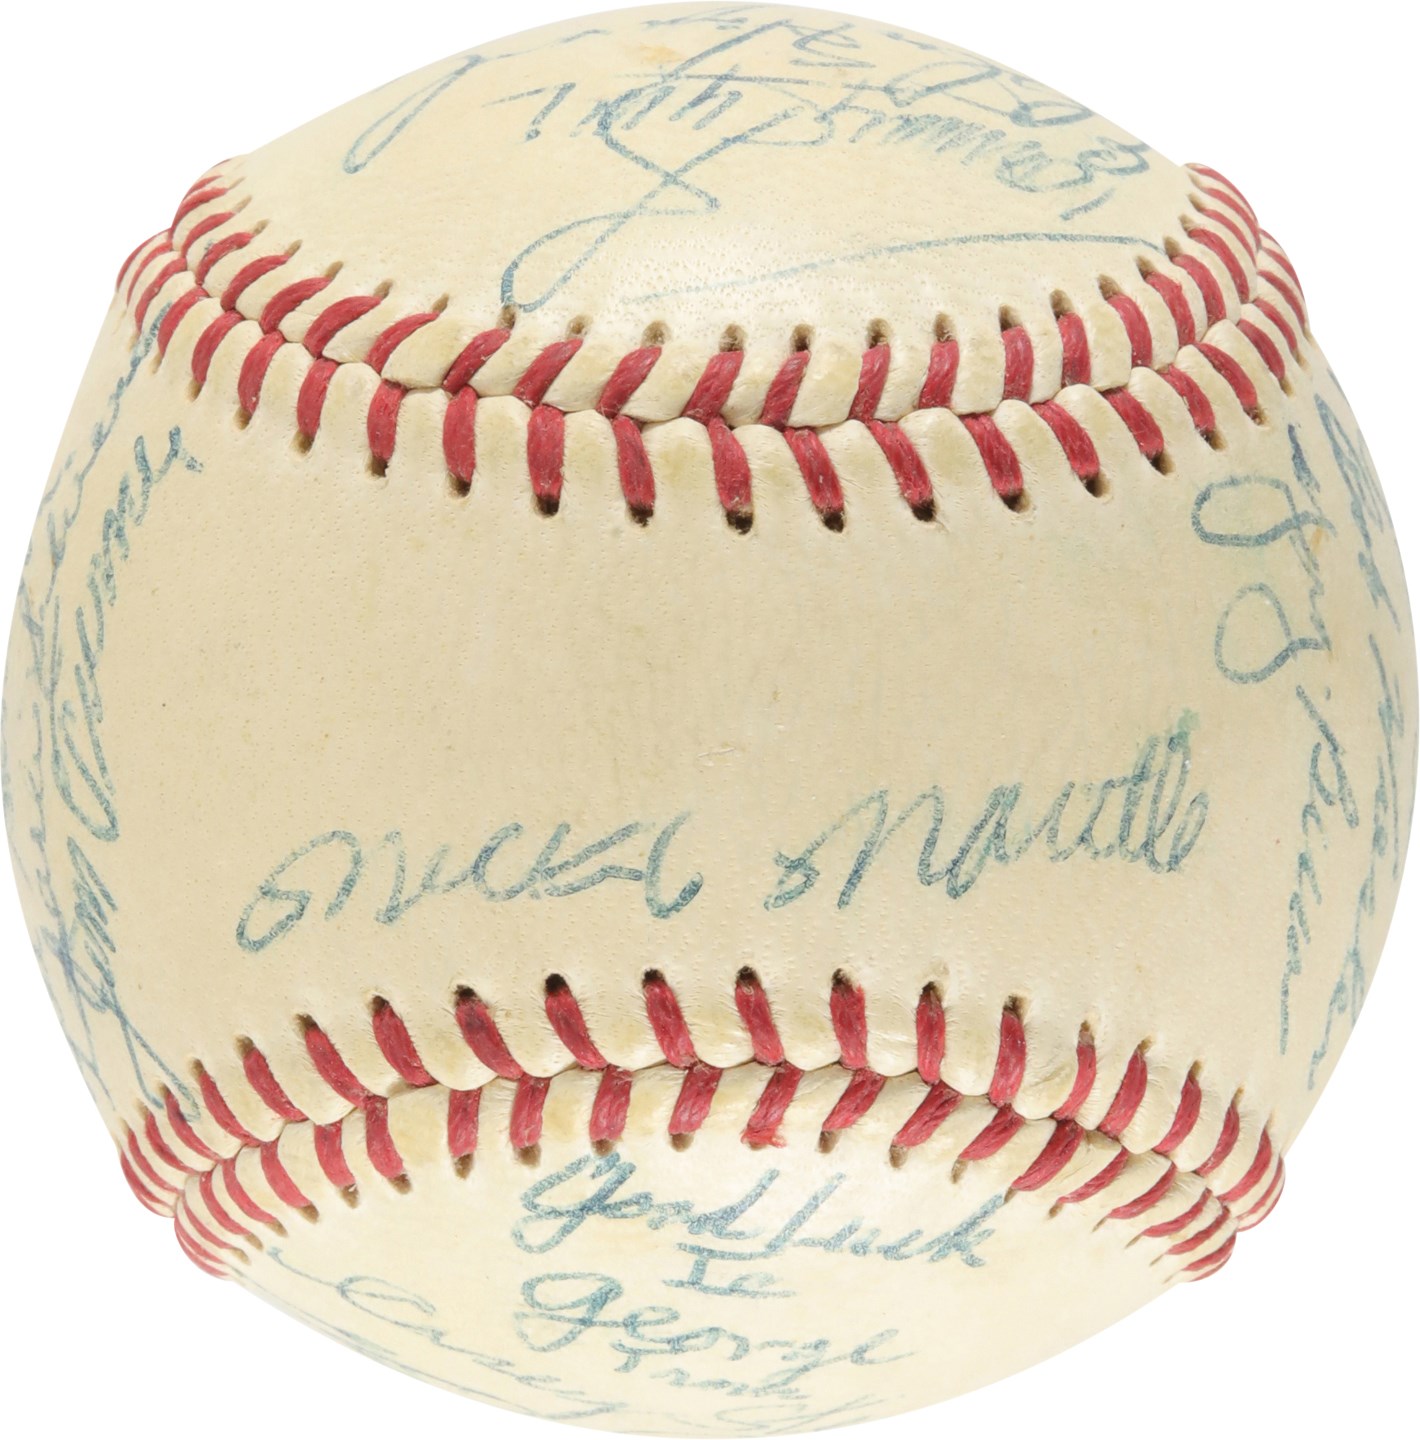 - Gorgeous 1955 American League Champion New York Yankees Team-Signed Baseball (JSA)